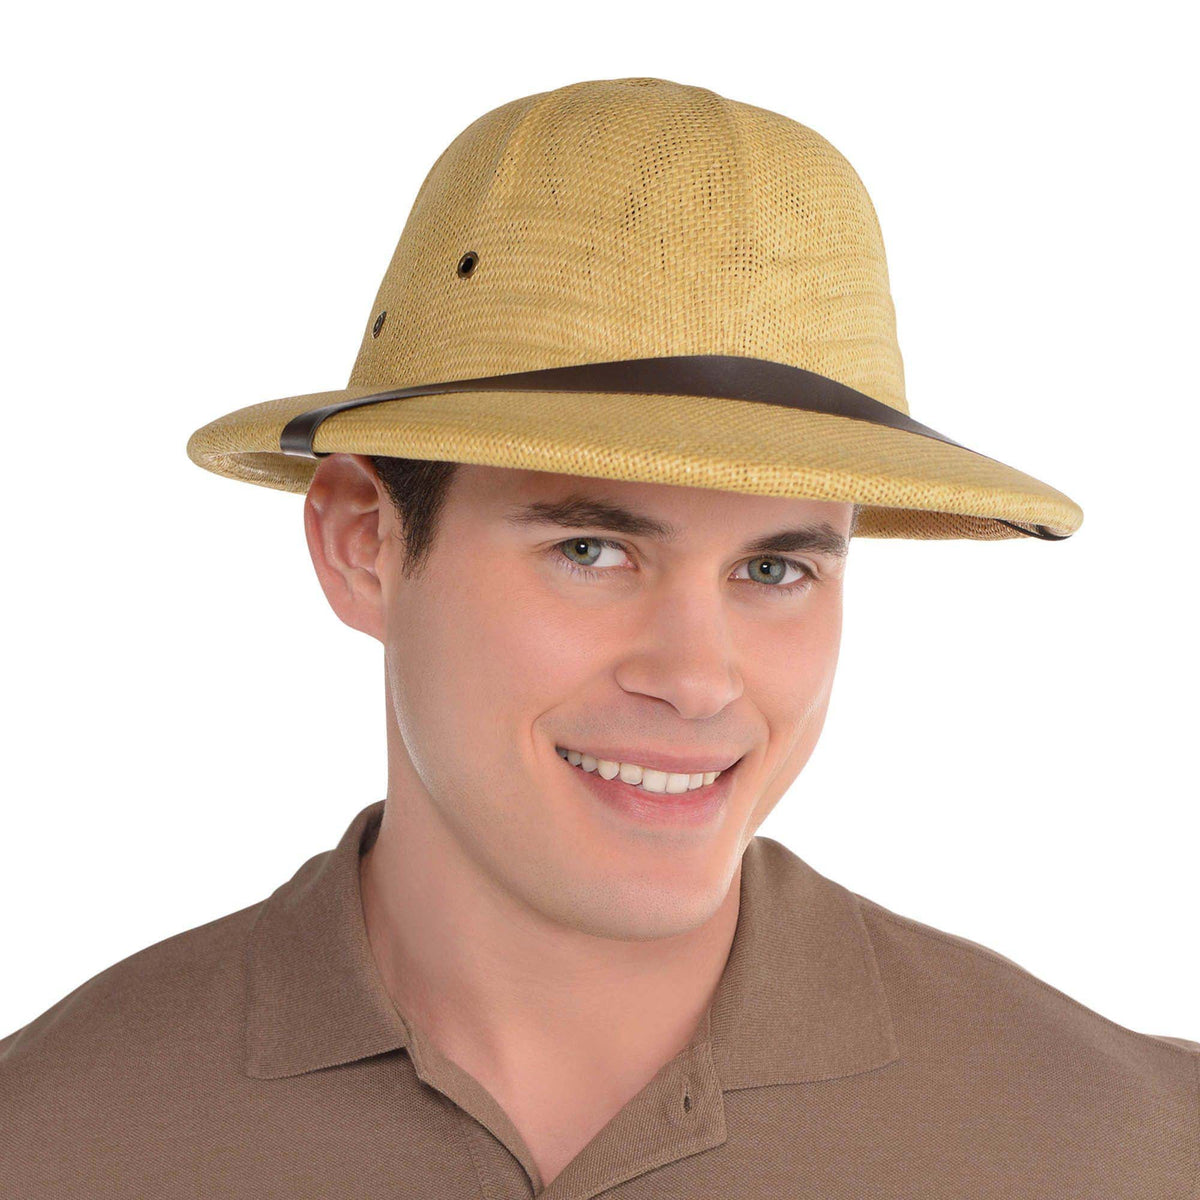 HALLOWEEN COSTUME CO. Costume Accessories Safari Hat Costume Accessory for Adults